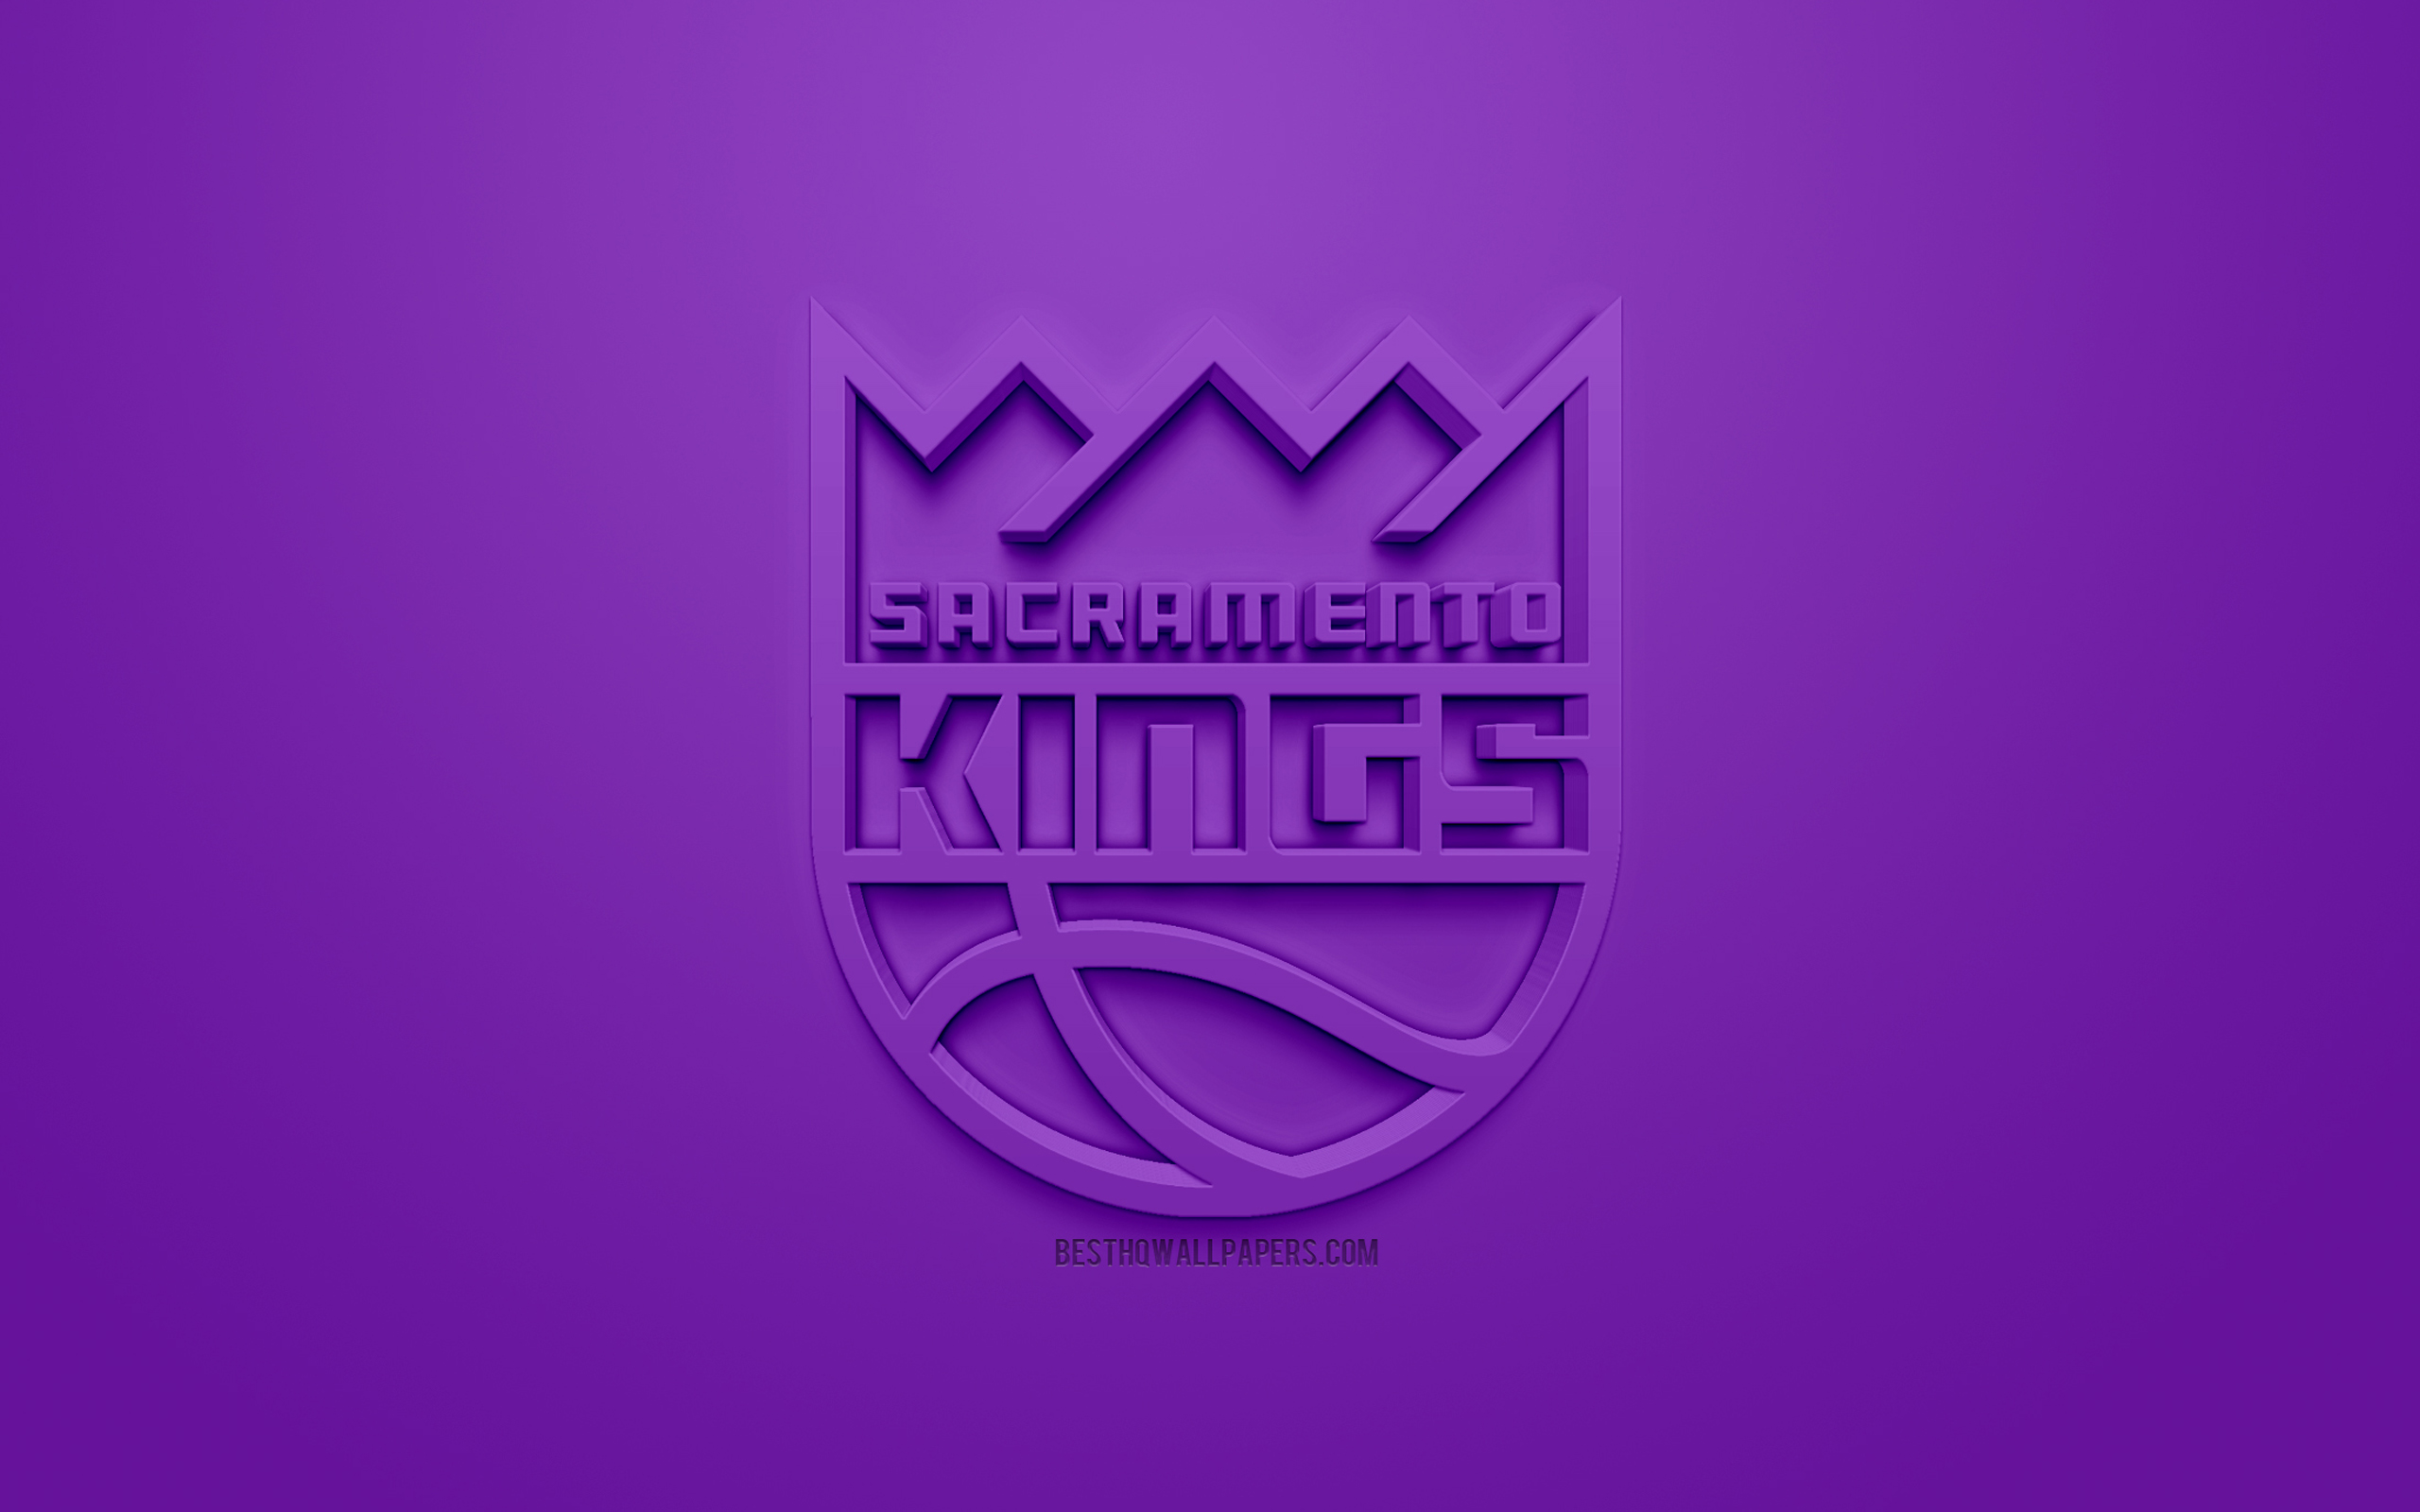 Sacramento Kings, Creative 3d Logo, Purple Background, - Sacramento Kings 3d Logo 2019 - HD Wallpaper 